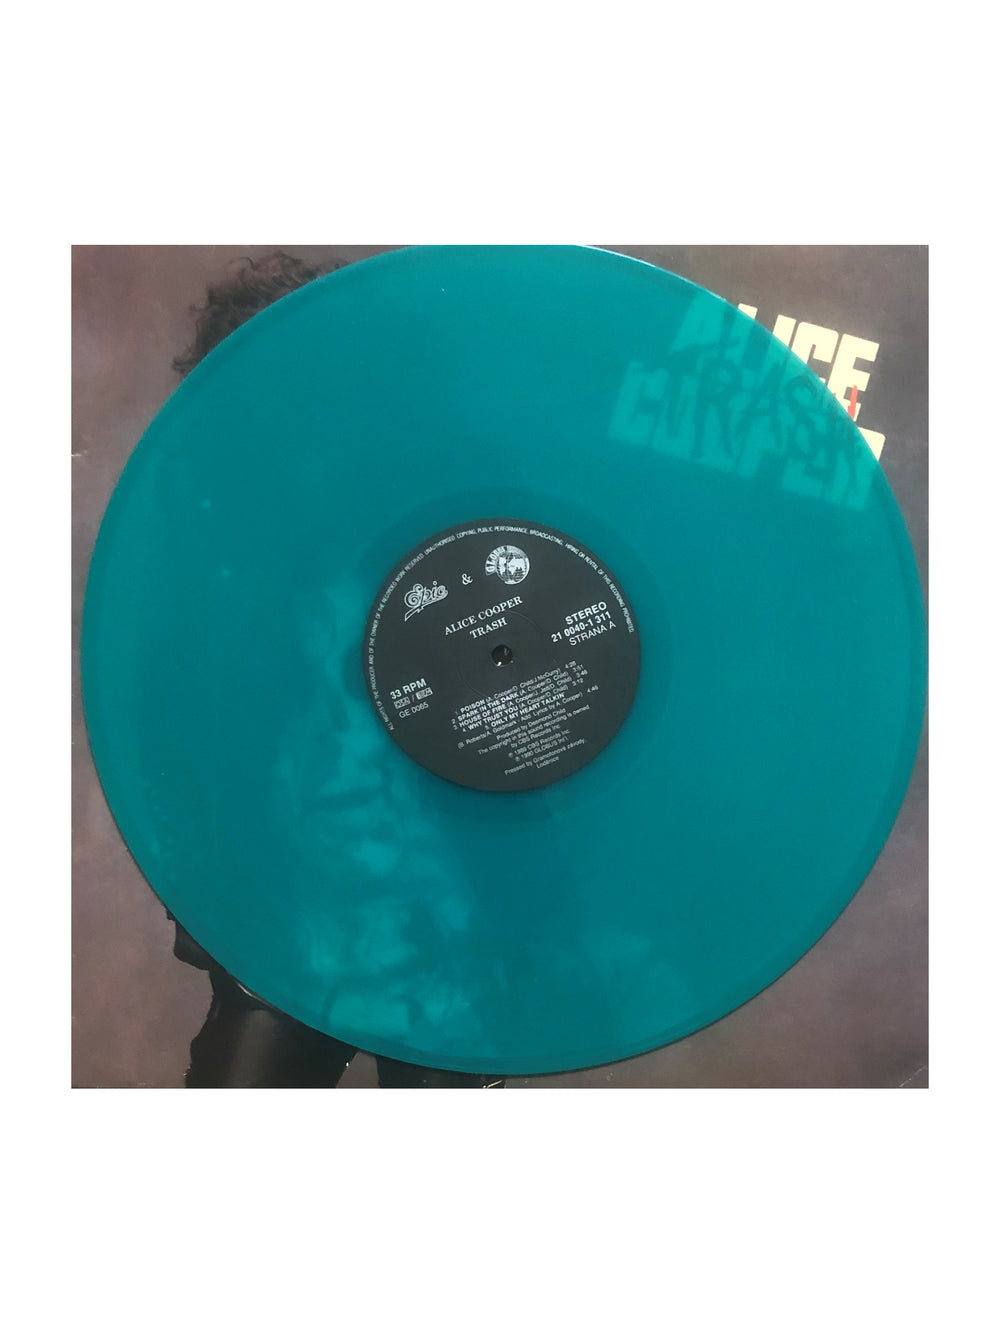 Alice Cooper –Trash Vinyl LP Album Rare Green Czech Globus Edition Preloved:1991